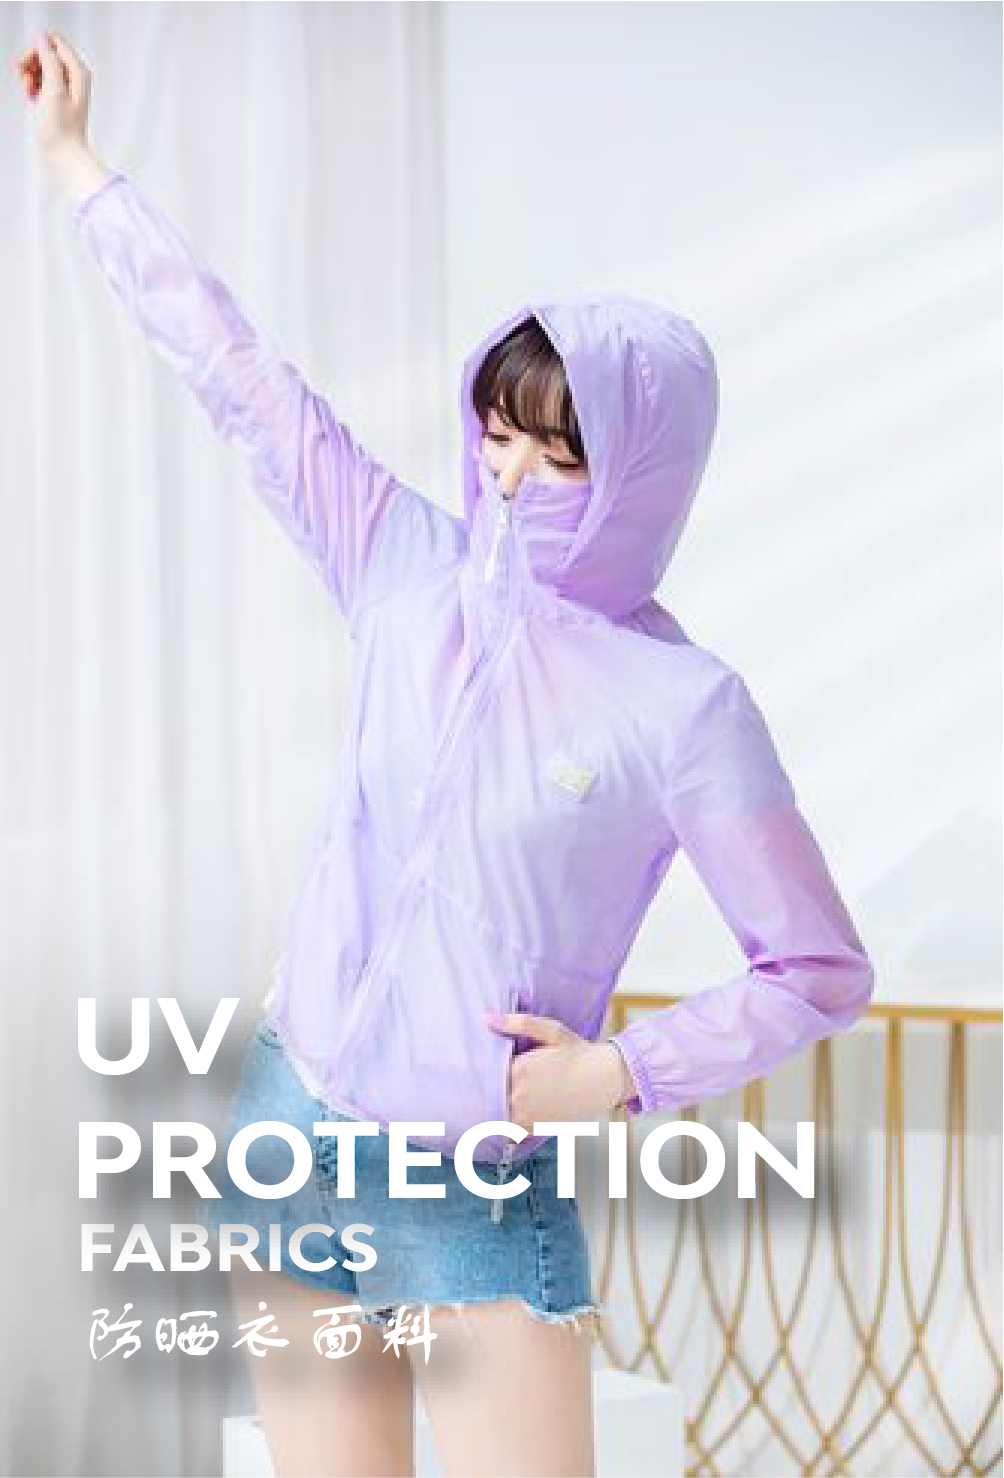 UV web poster